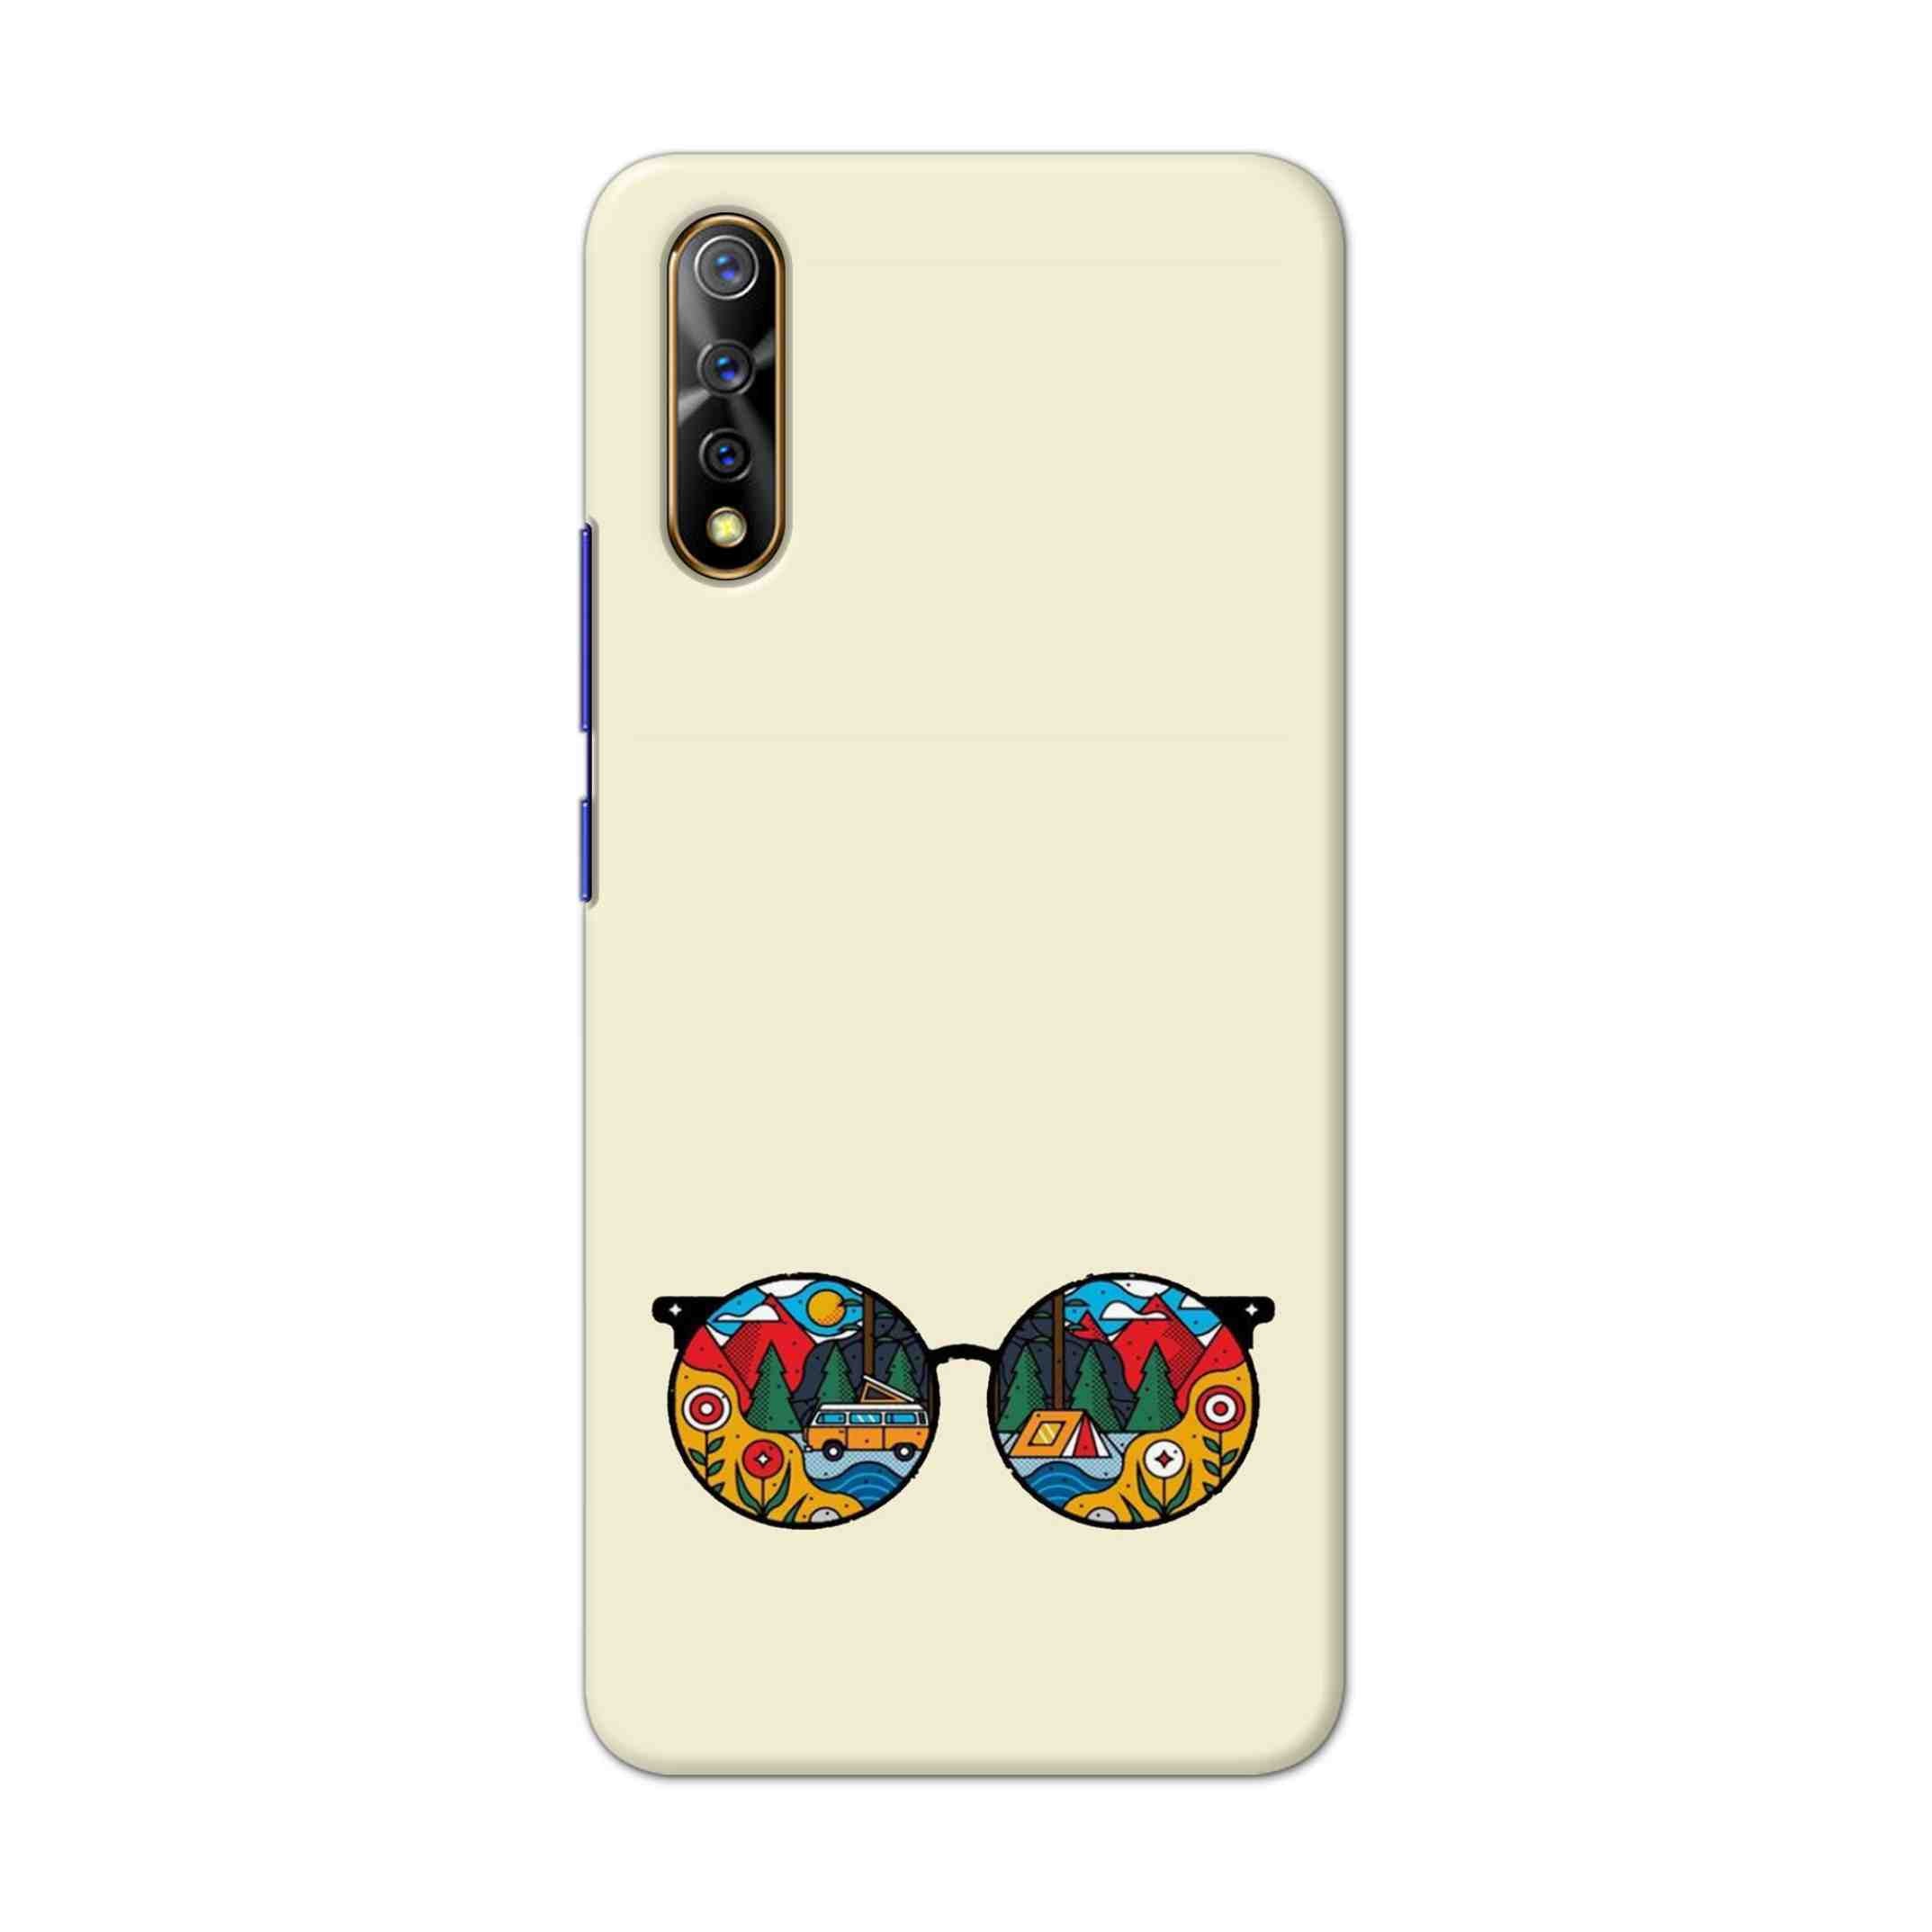 Buy Rainbow Sunglasses Hard Back Mobile Phone Case Cover For Vivo S1 / Z1x Online